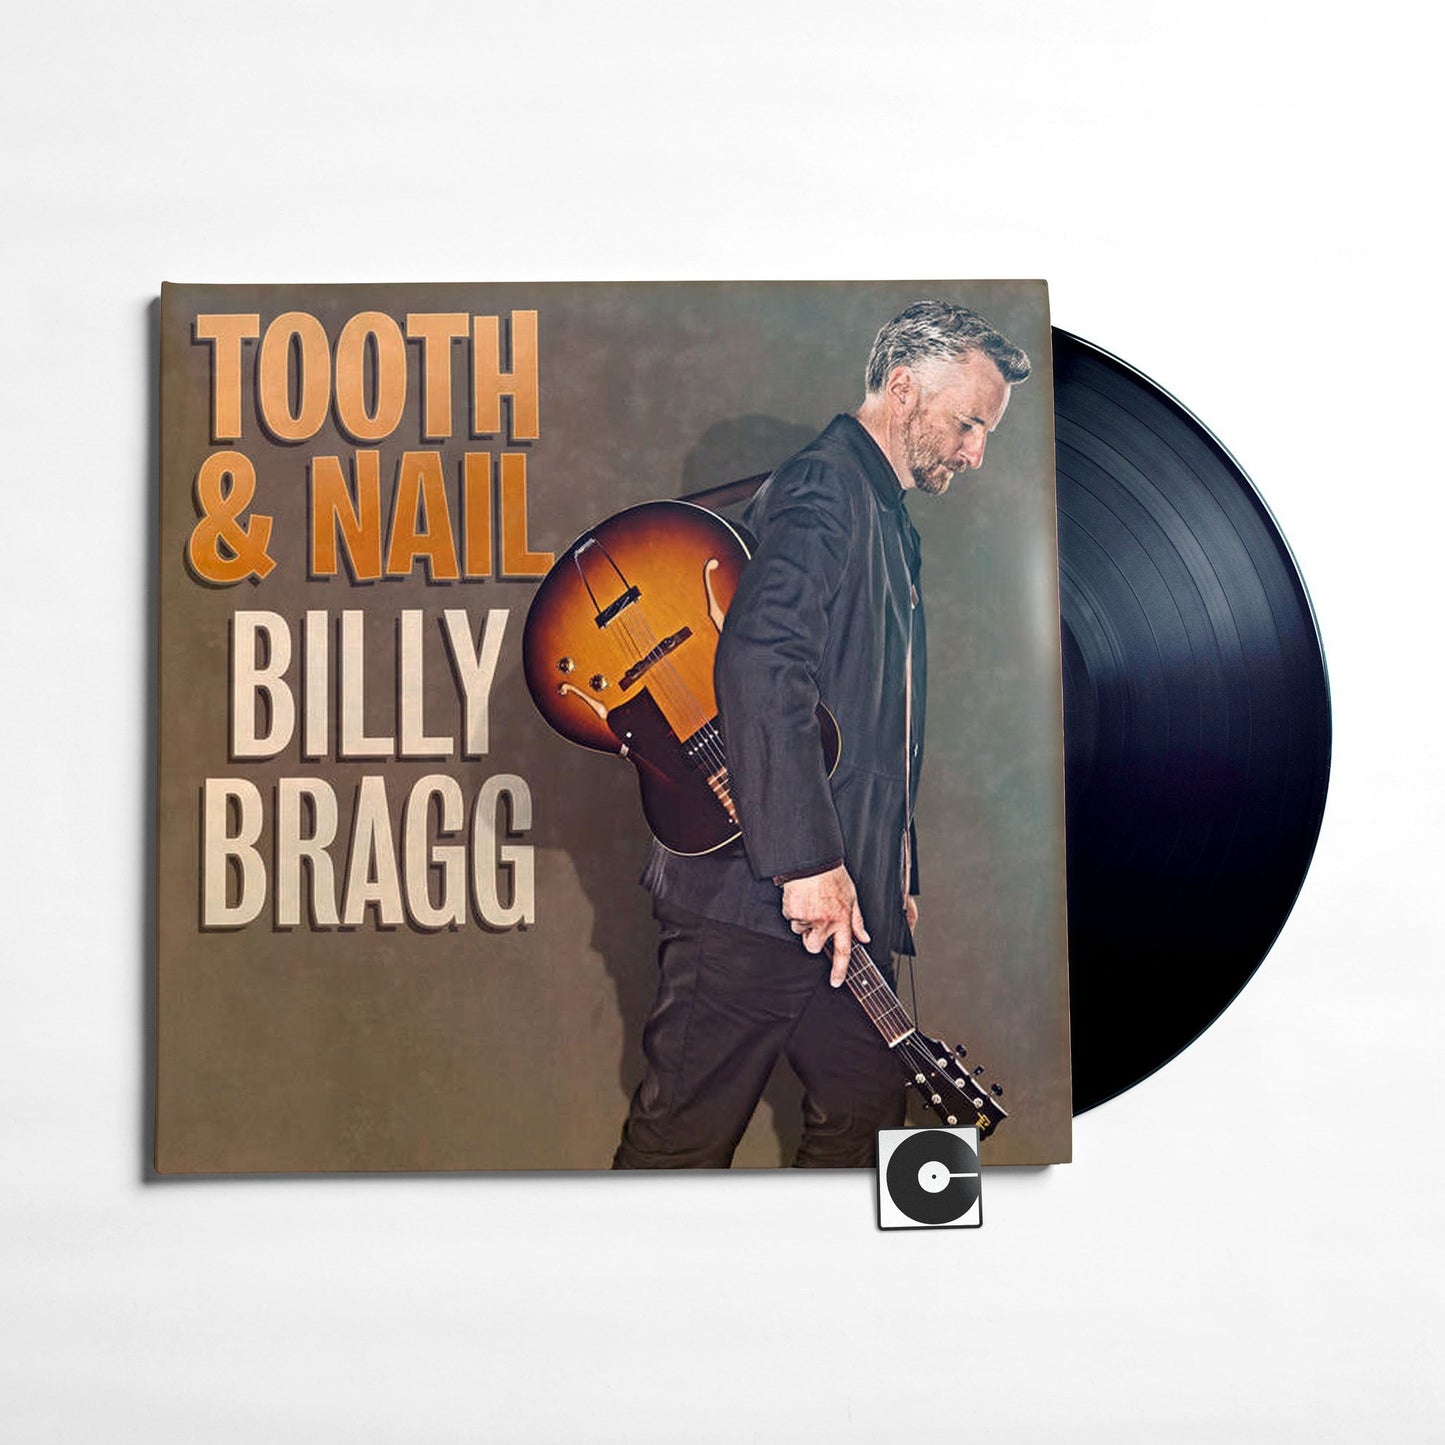 Billy Bragg - "Tooth & Nail"